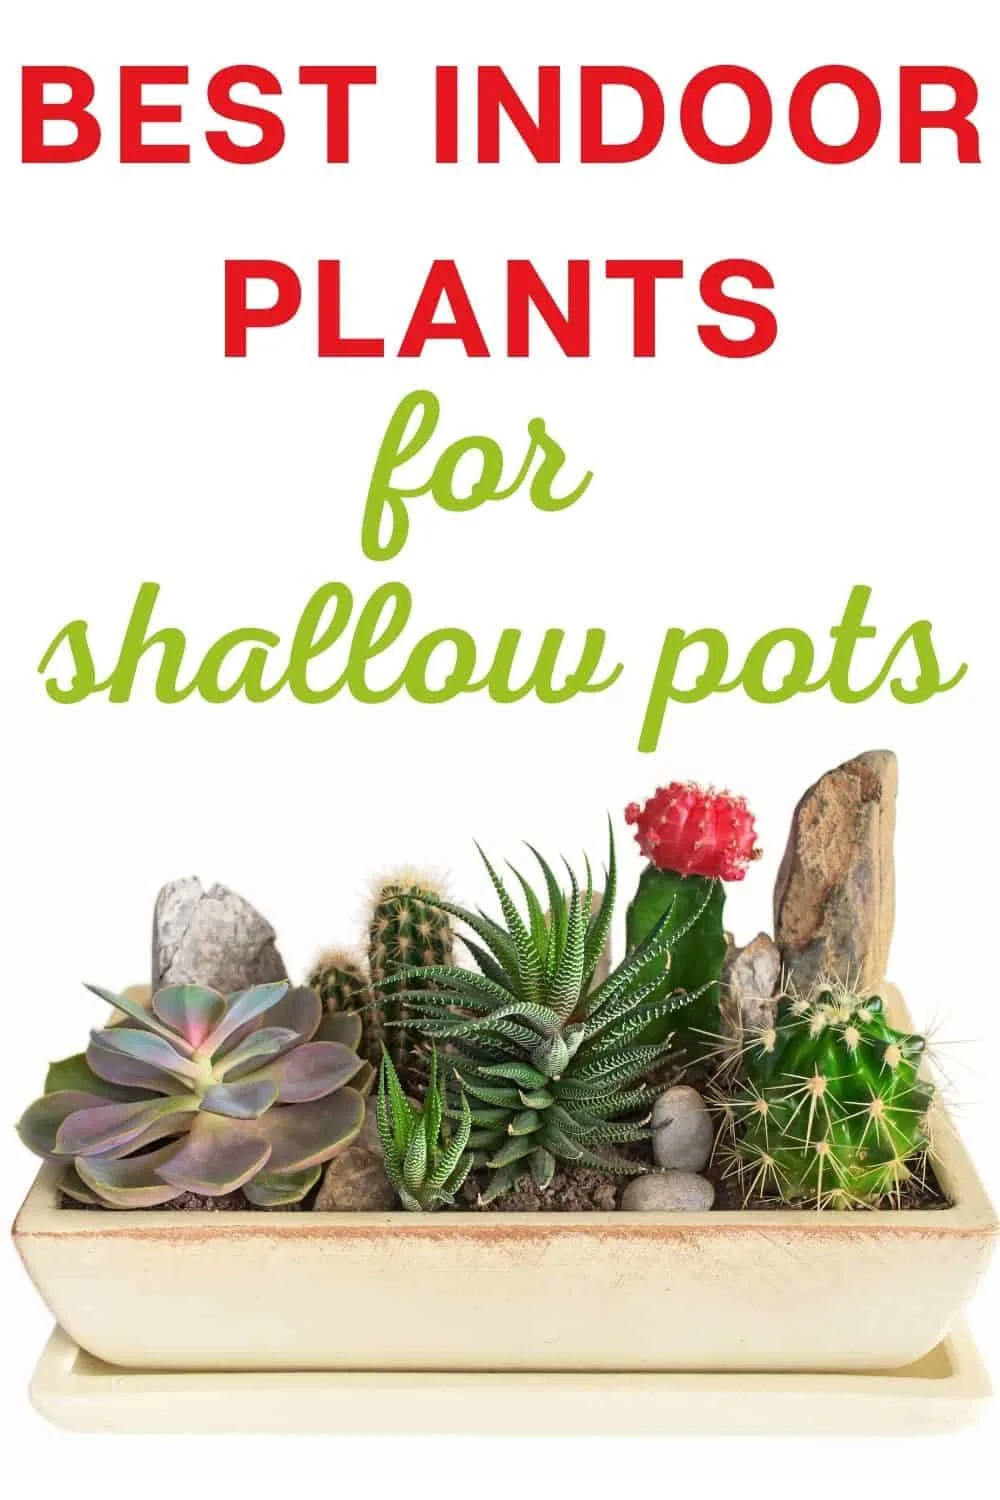 Best indoor plants for shallow pots